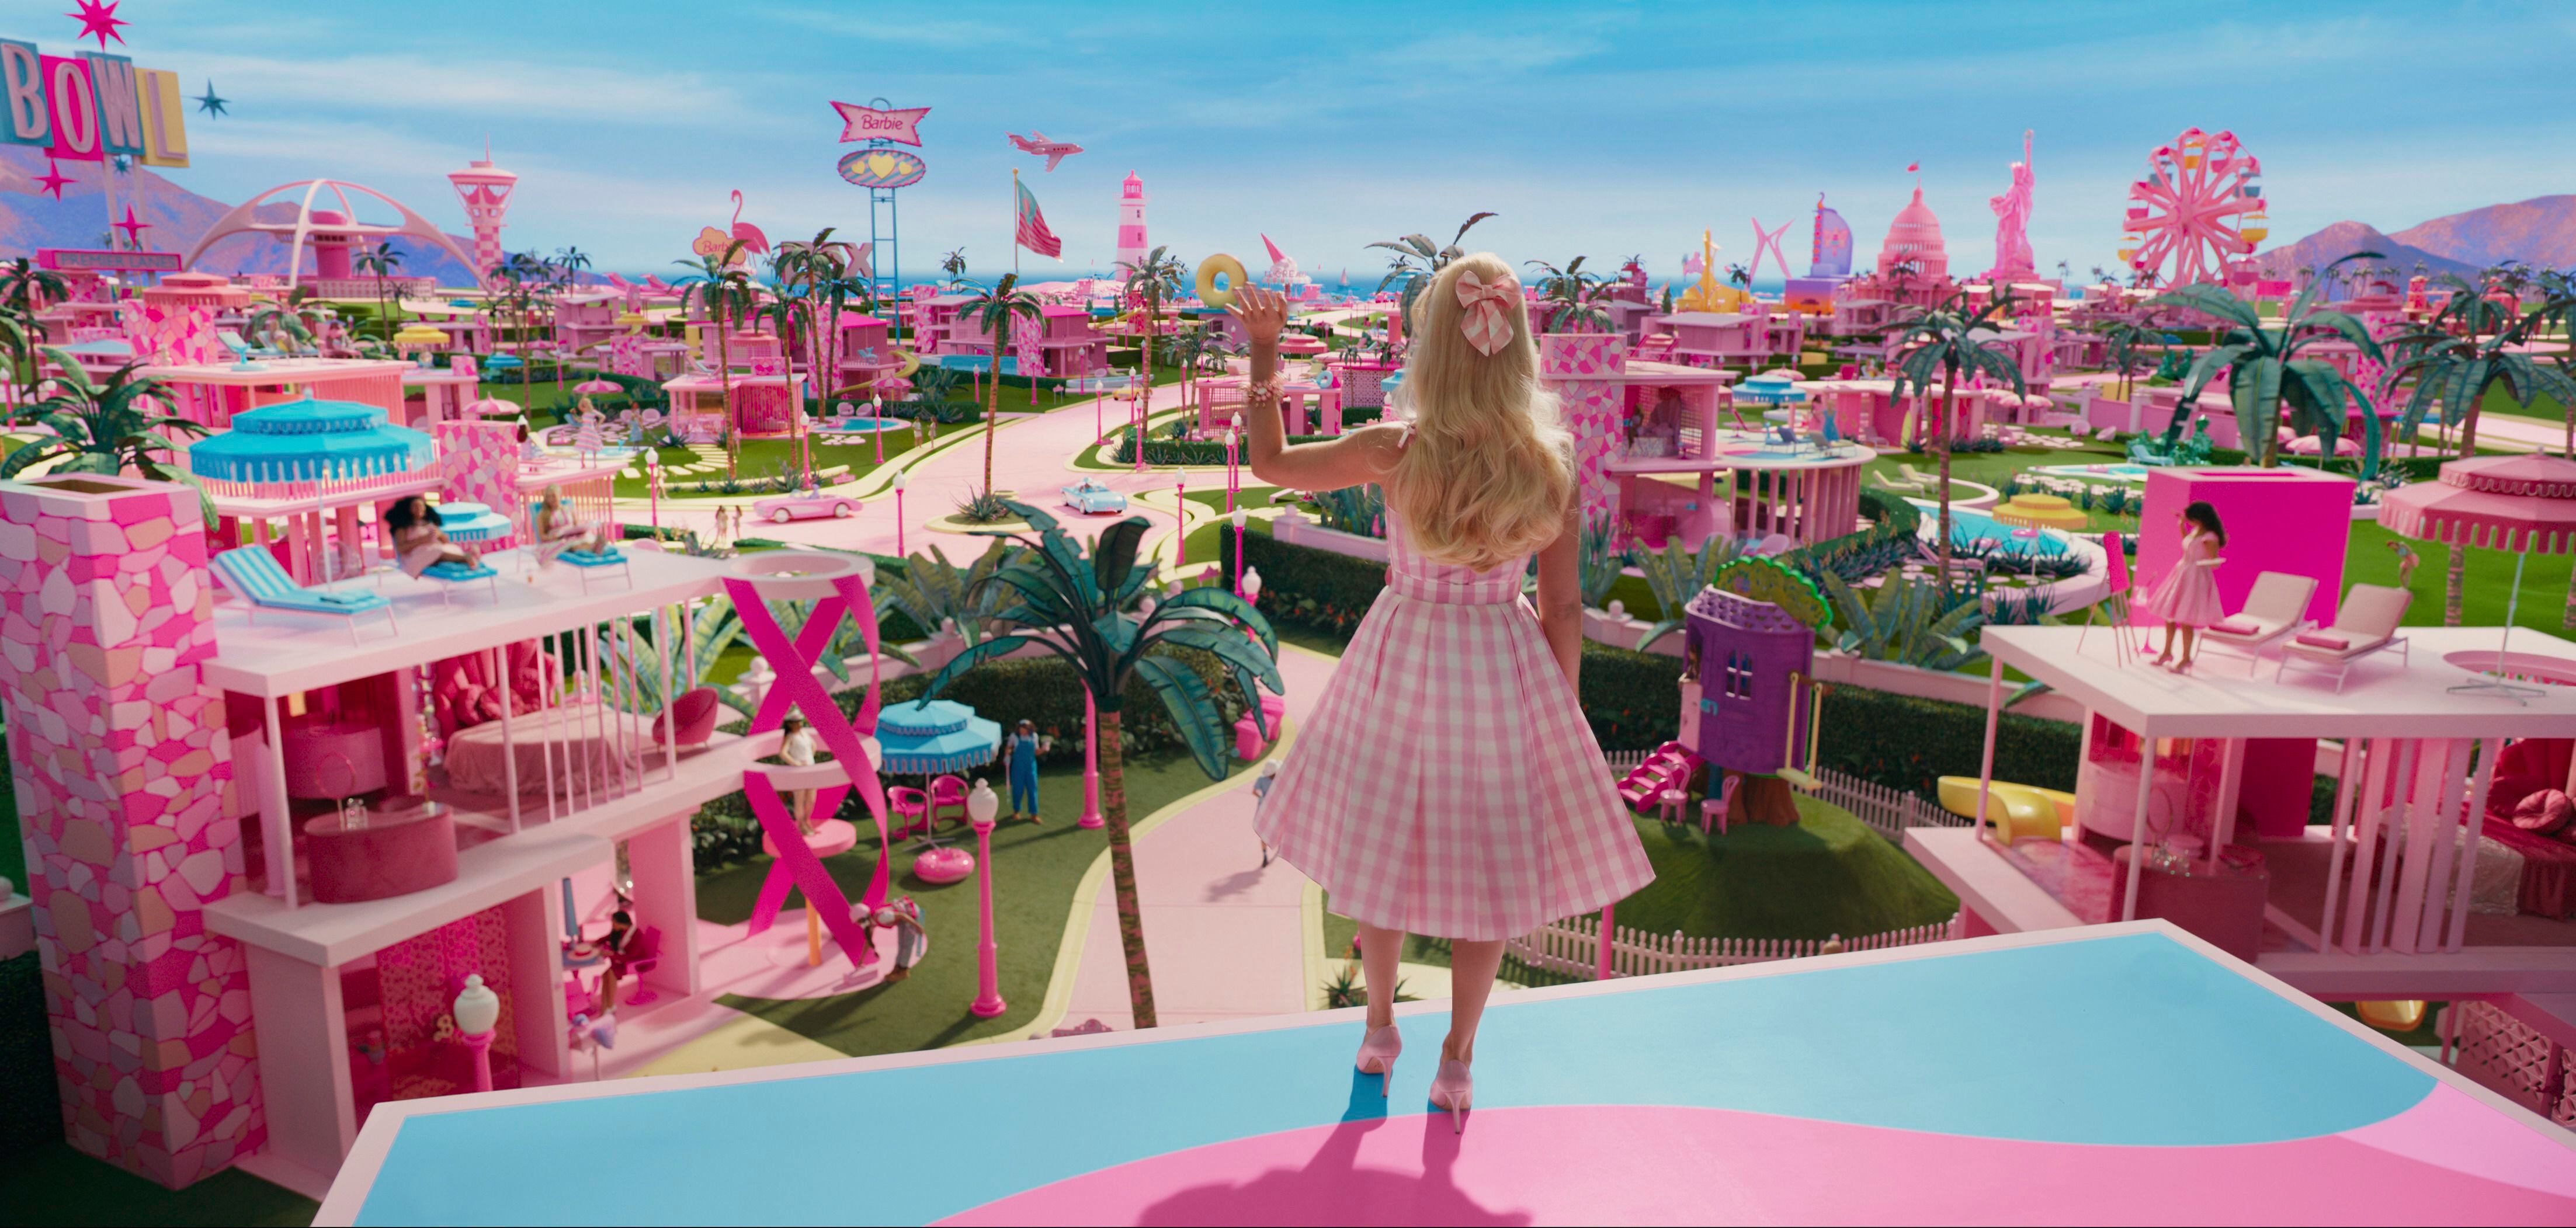 Margot Robbie in scene "Barbie" (Photo: Warner Bros. Pictures, AP)